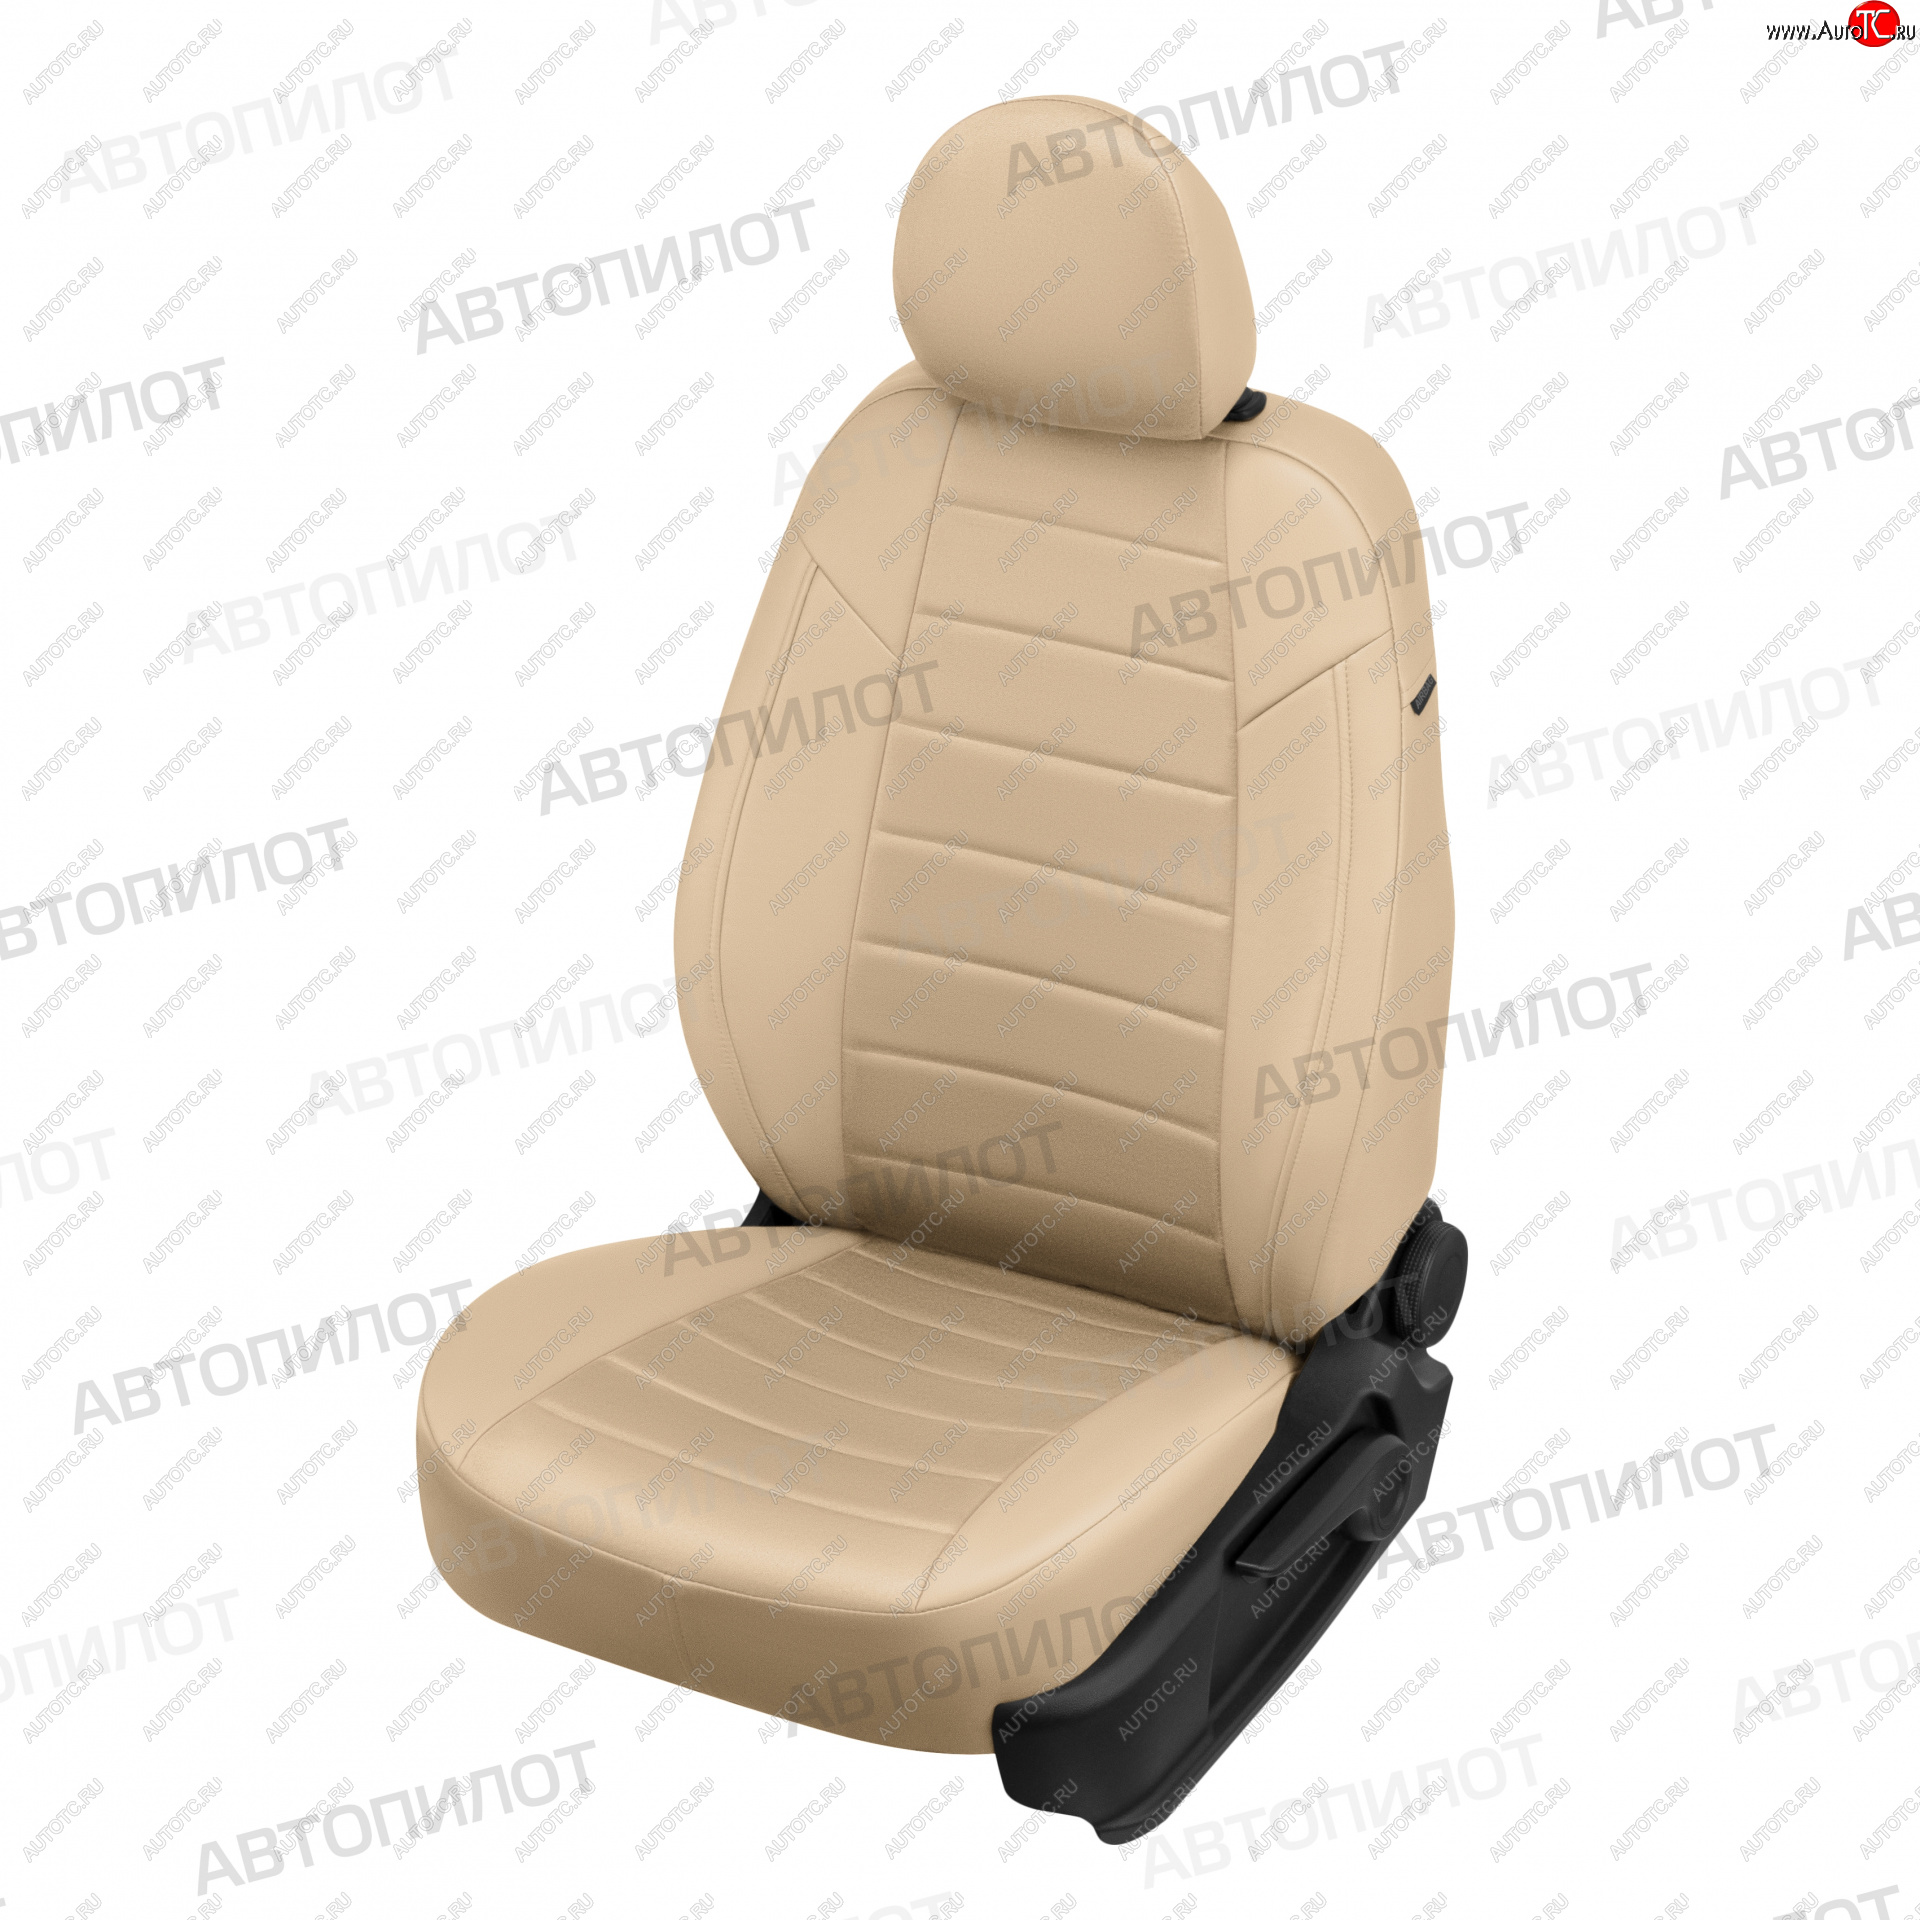 13 849 р. Чехлы сидений (Titanium, экокожа/алькантара) Автопилот Ford Kuga 1 (2008-2013) (бежевый)